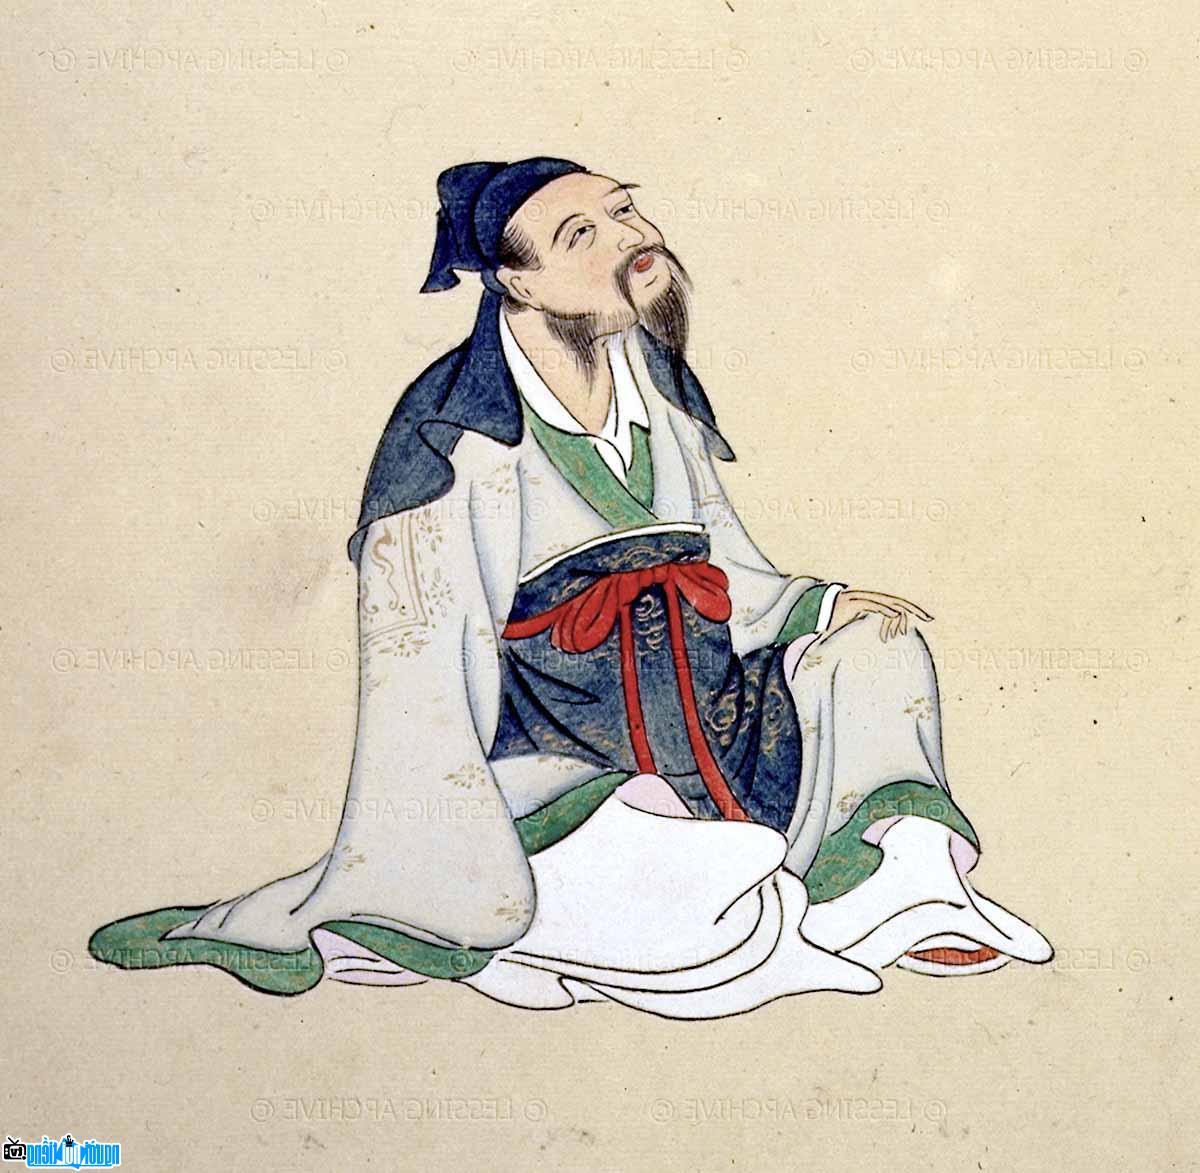  Li Bai - The great poet of Chinese literature